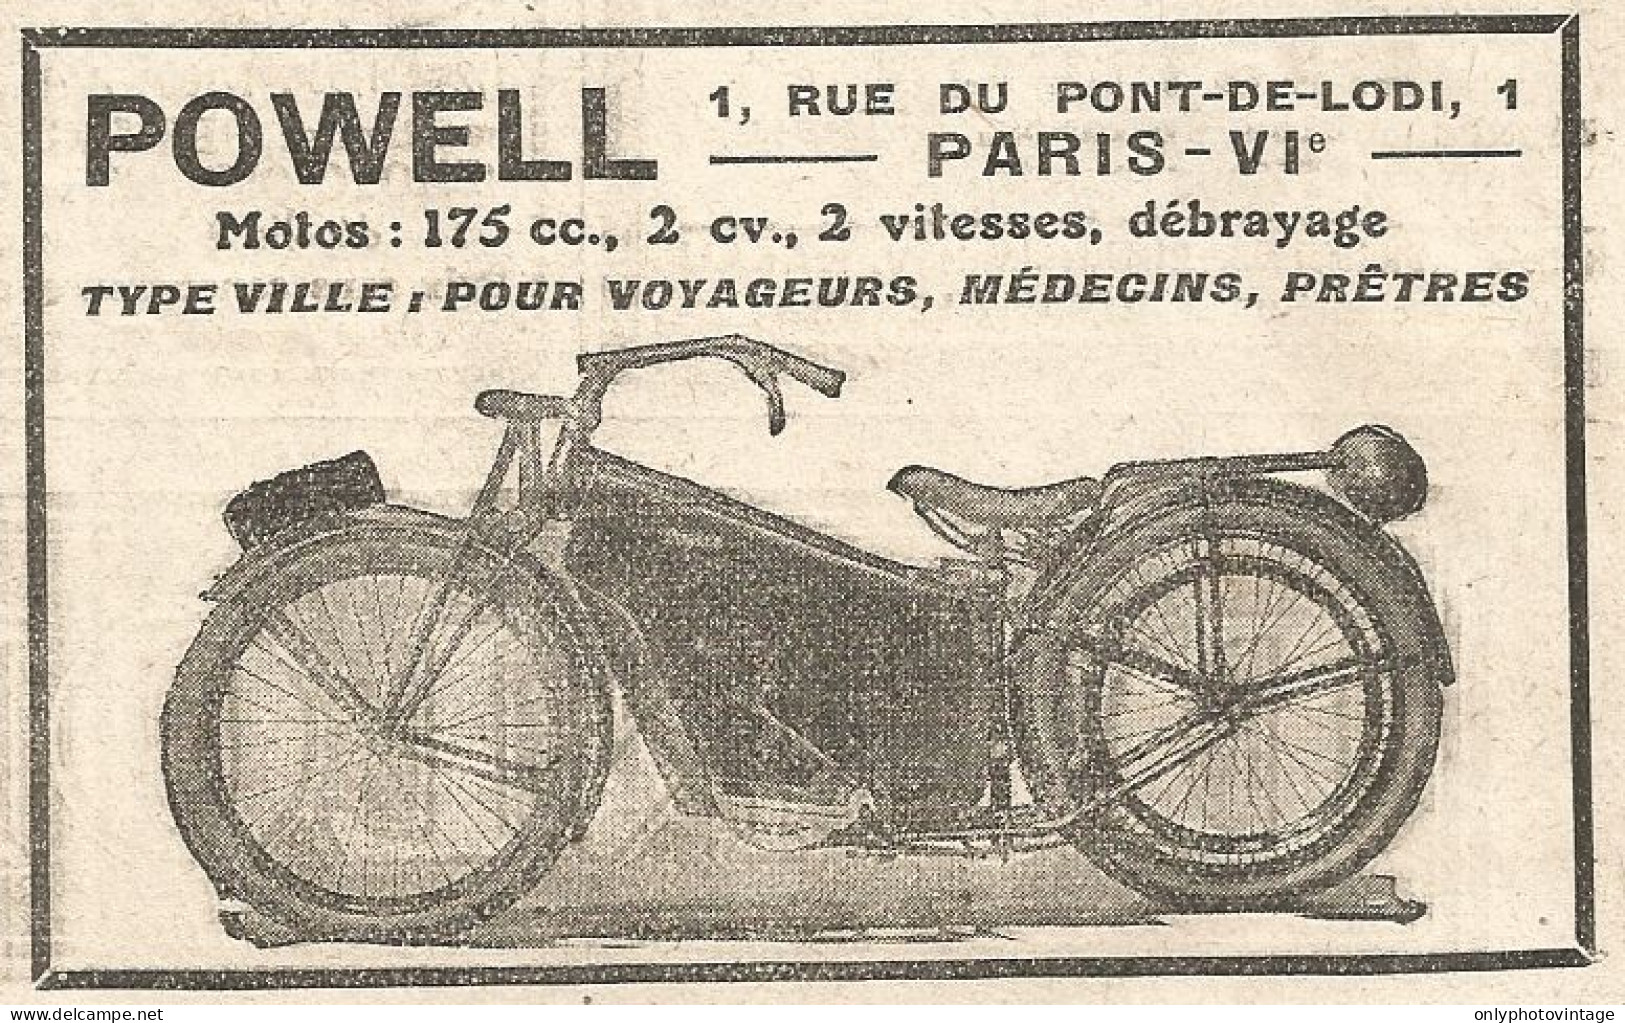 Motocicletta 175 Cc. POWELL - Pubblicitï¿½ Del 1925 - Old Advertising - Reclame